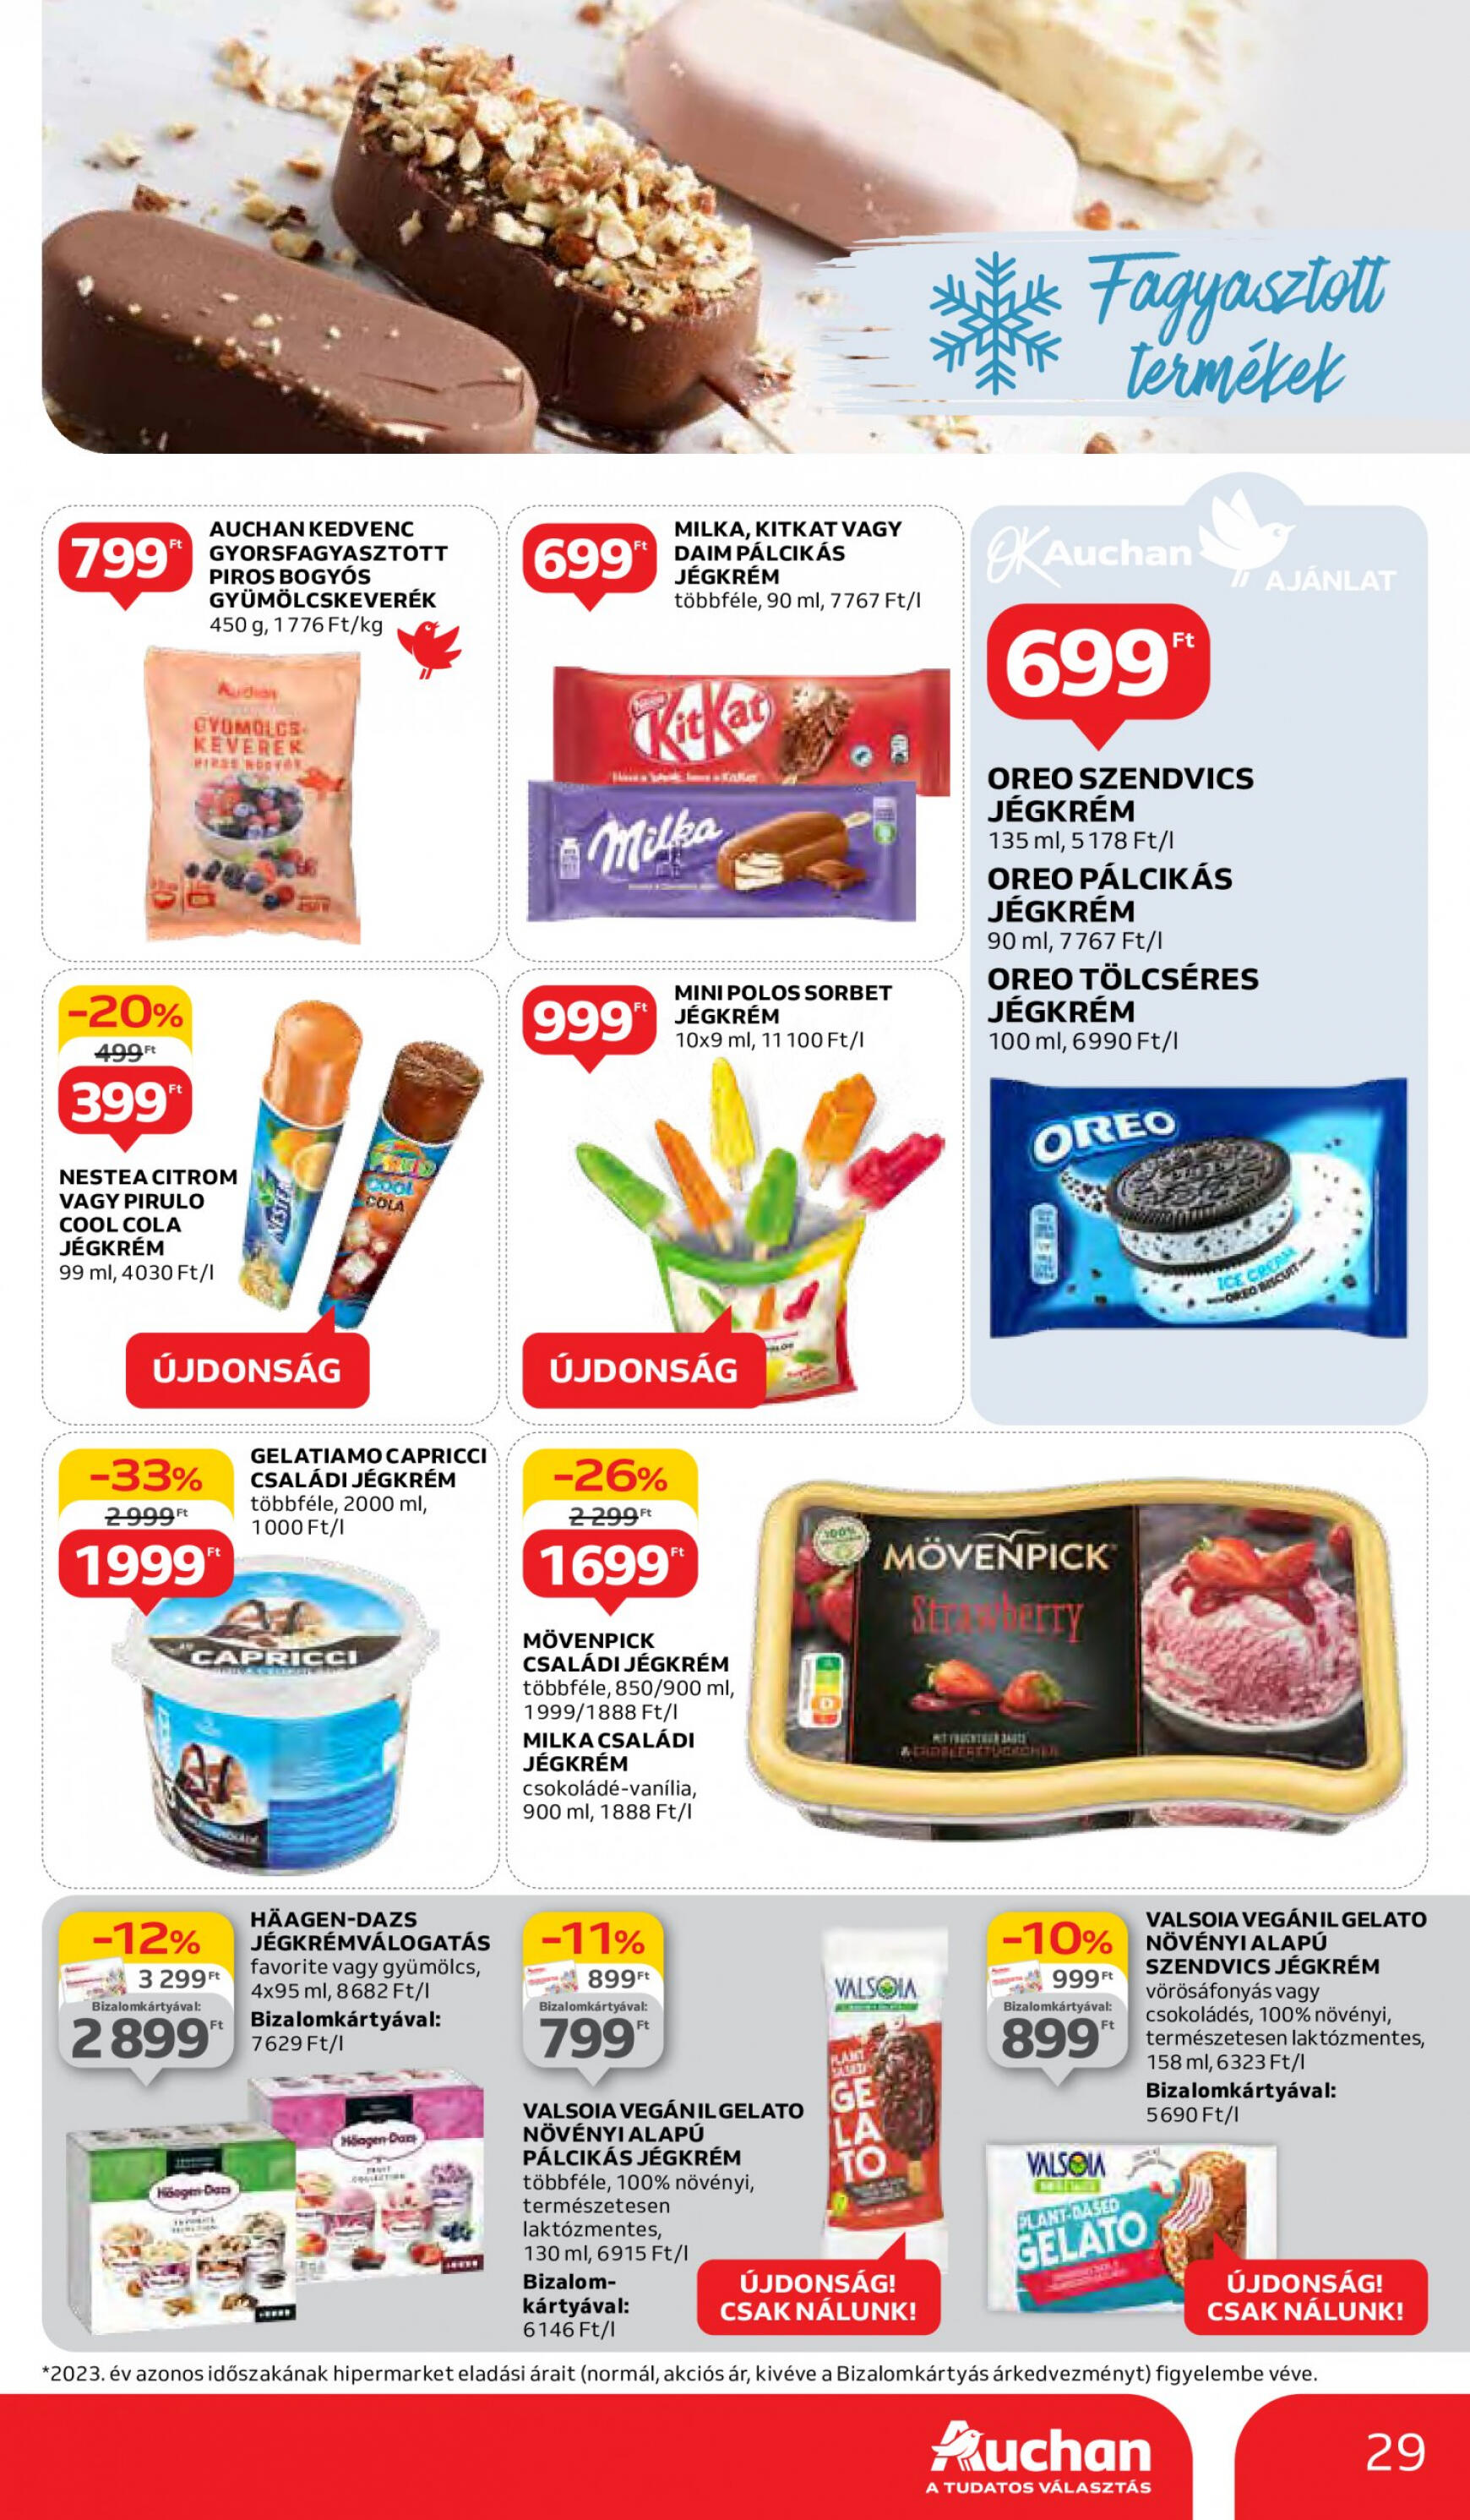 auchan - Aktuális újság Auchan 05.02. - 05.08. - page: 29